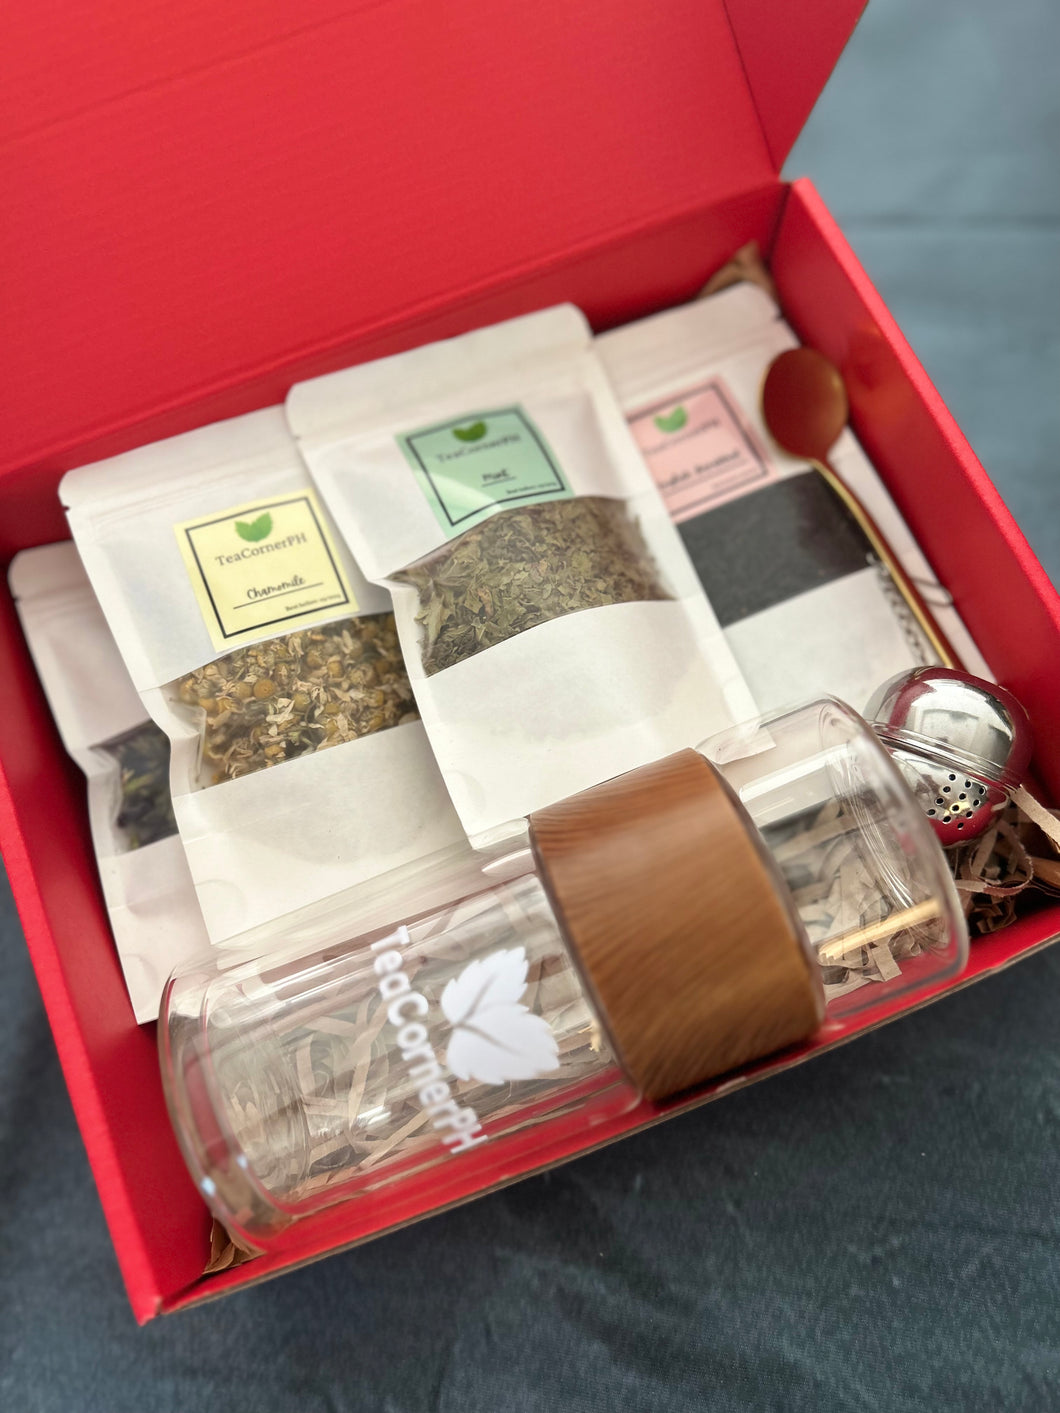 Loose Leaf Tea Discovery Gift Set